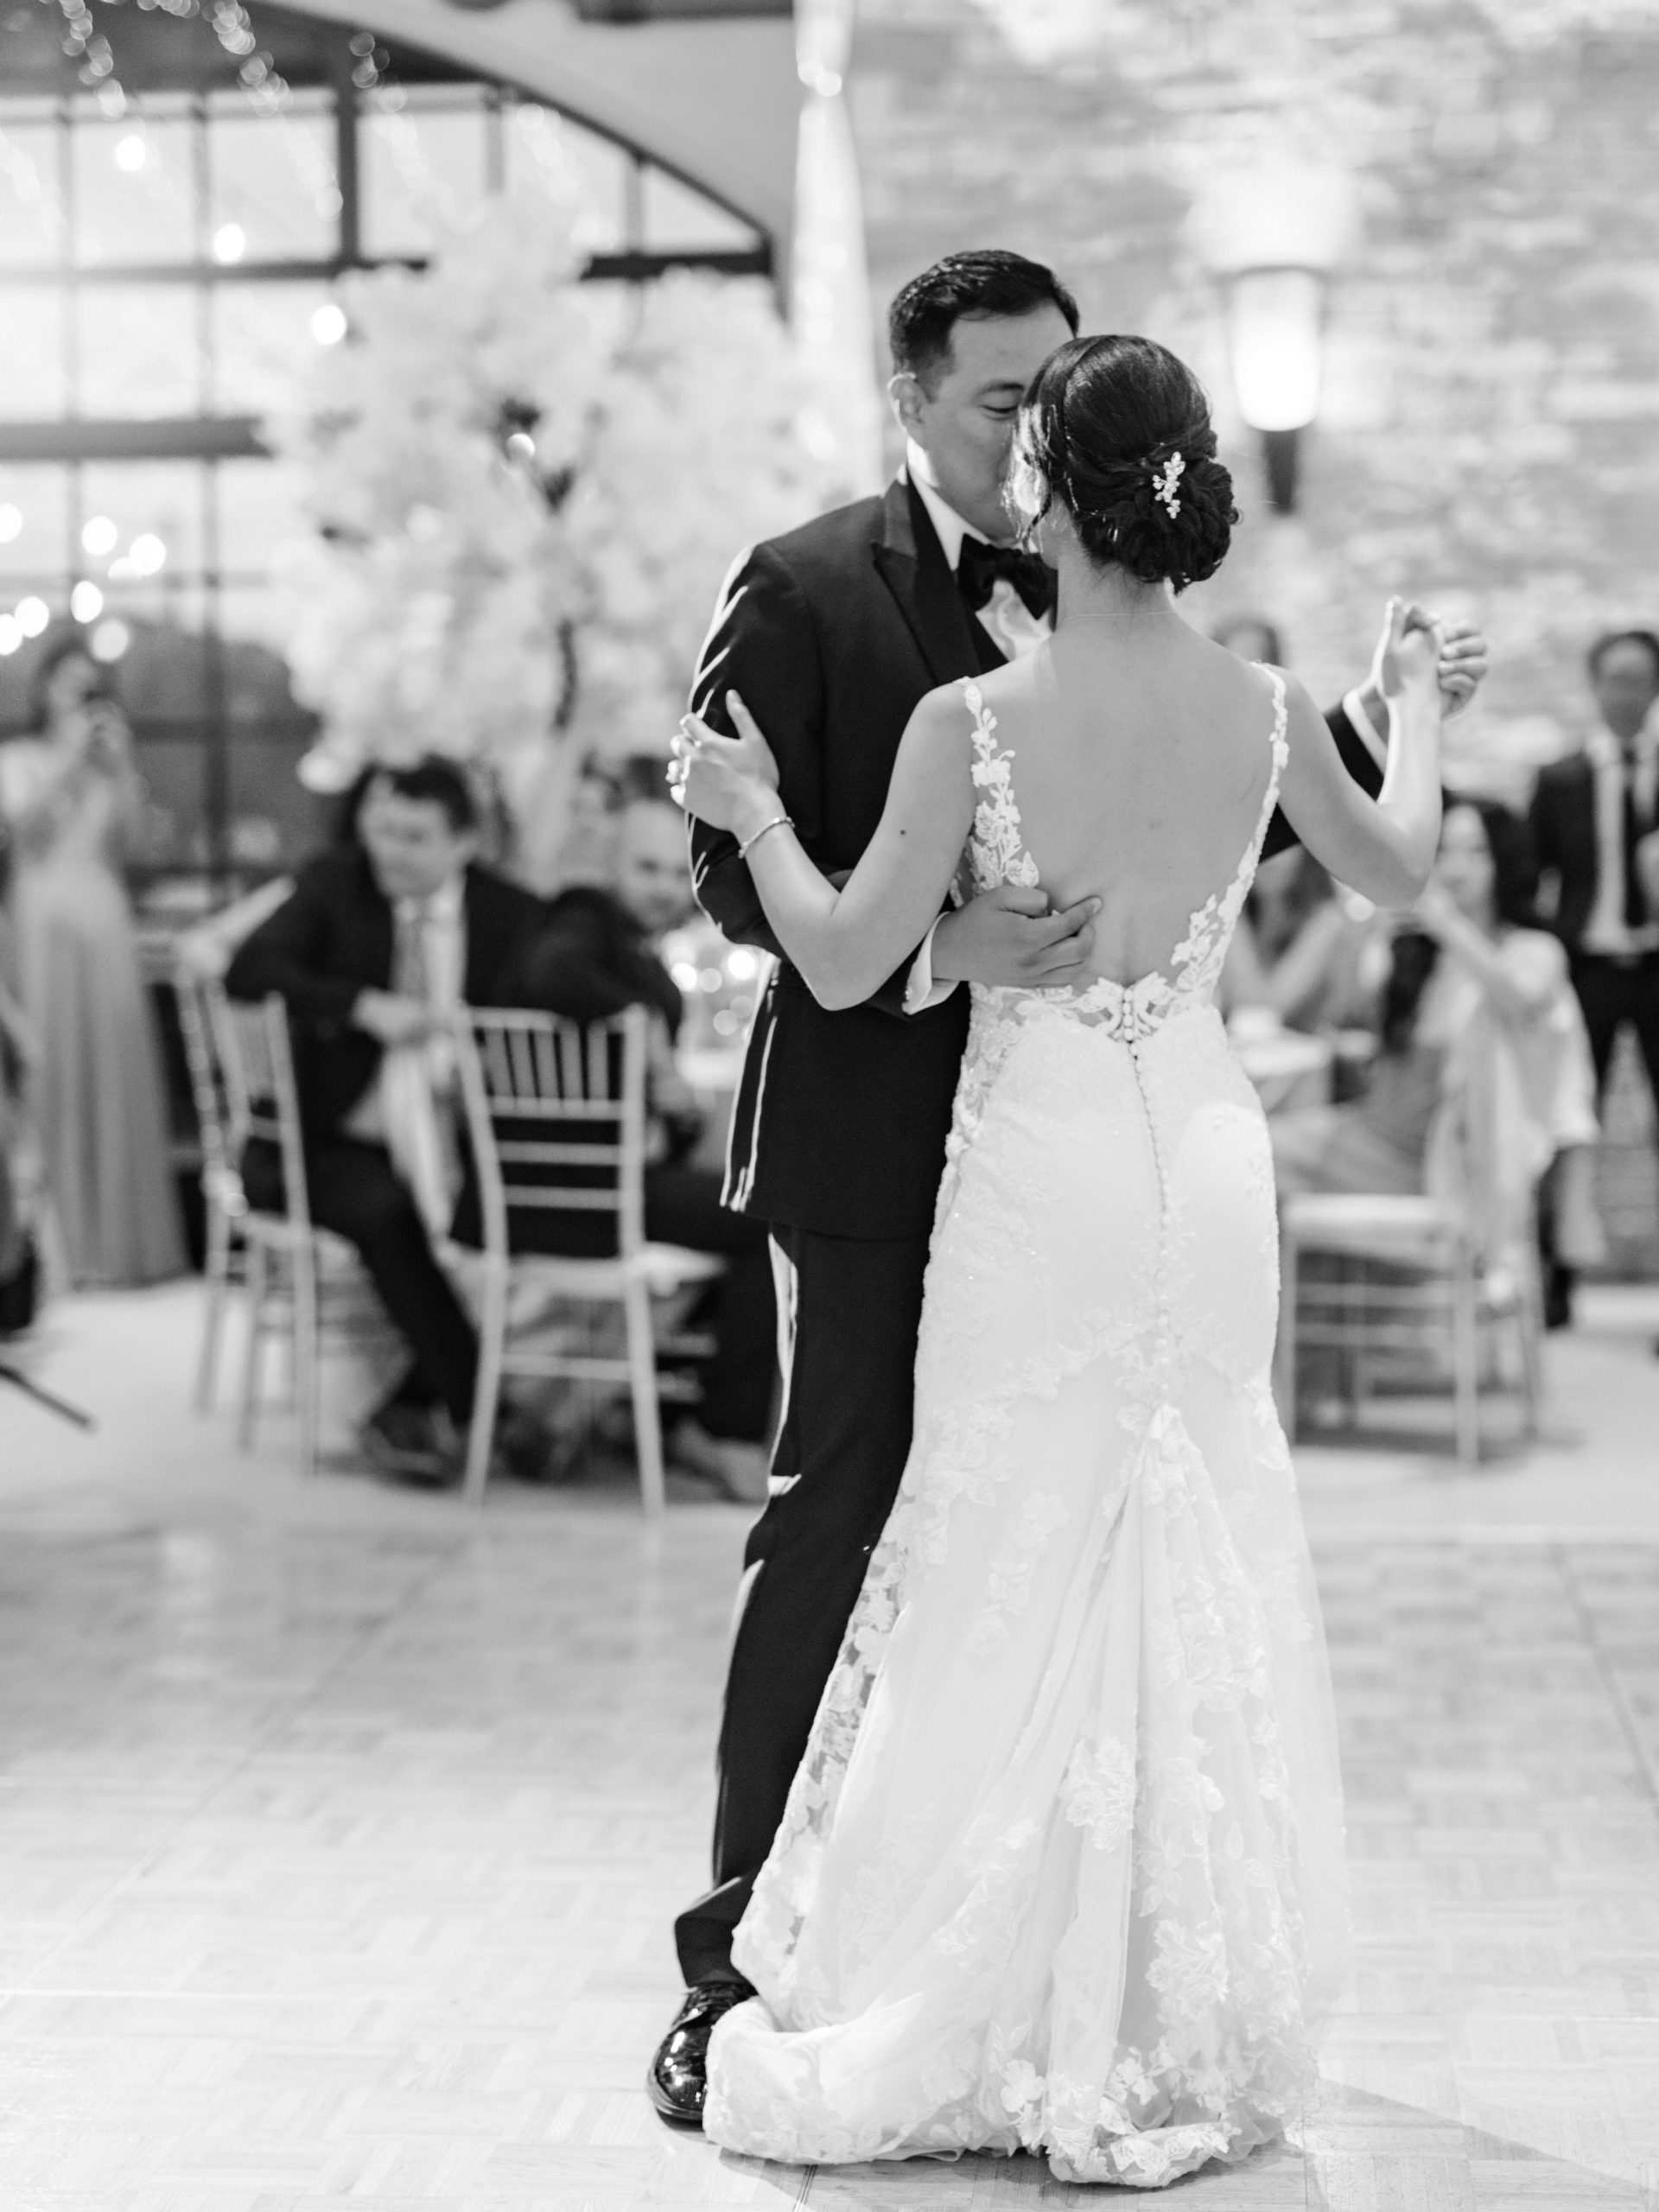 Tehama Golf Club Wedding - Bride and Groom Share their First Dance